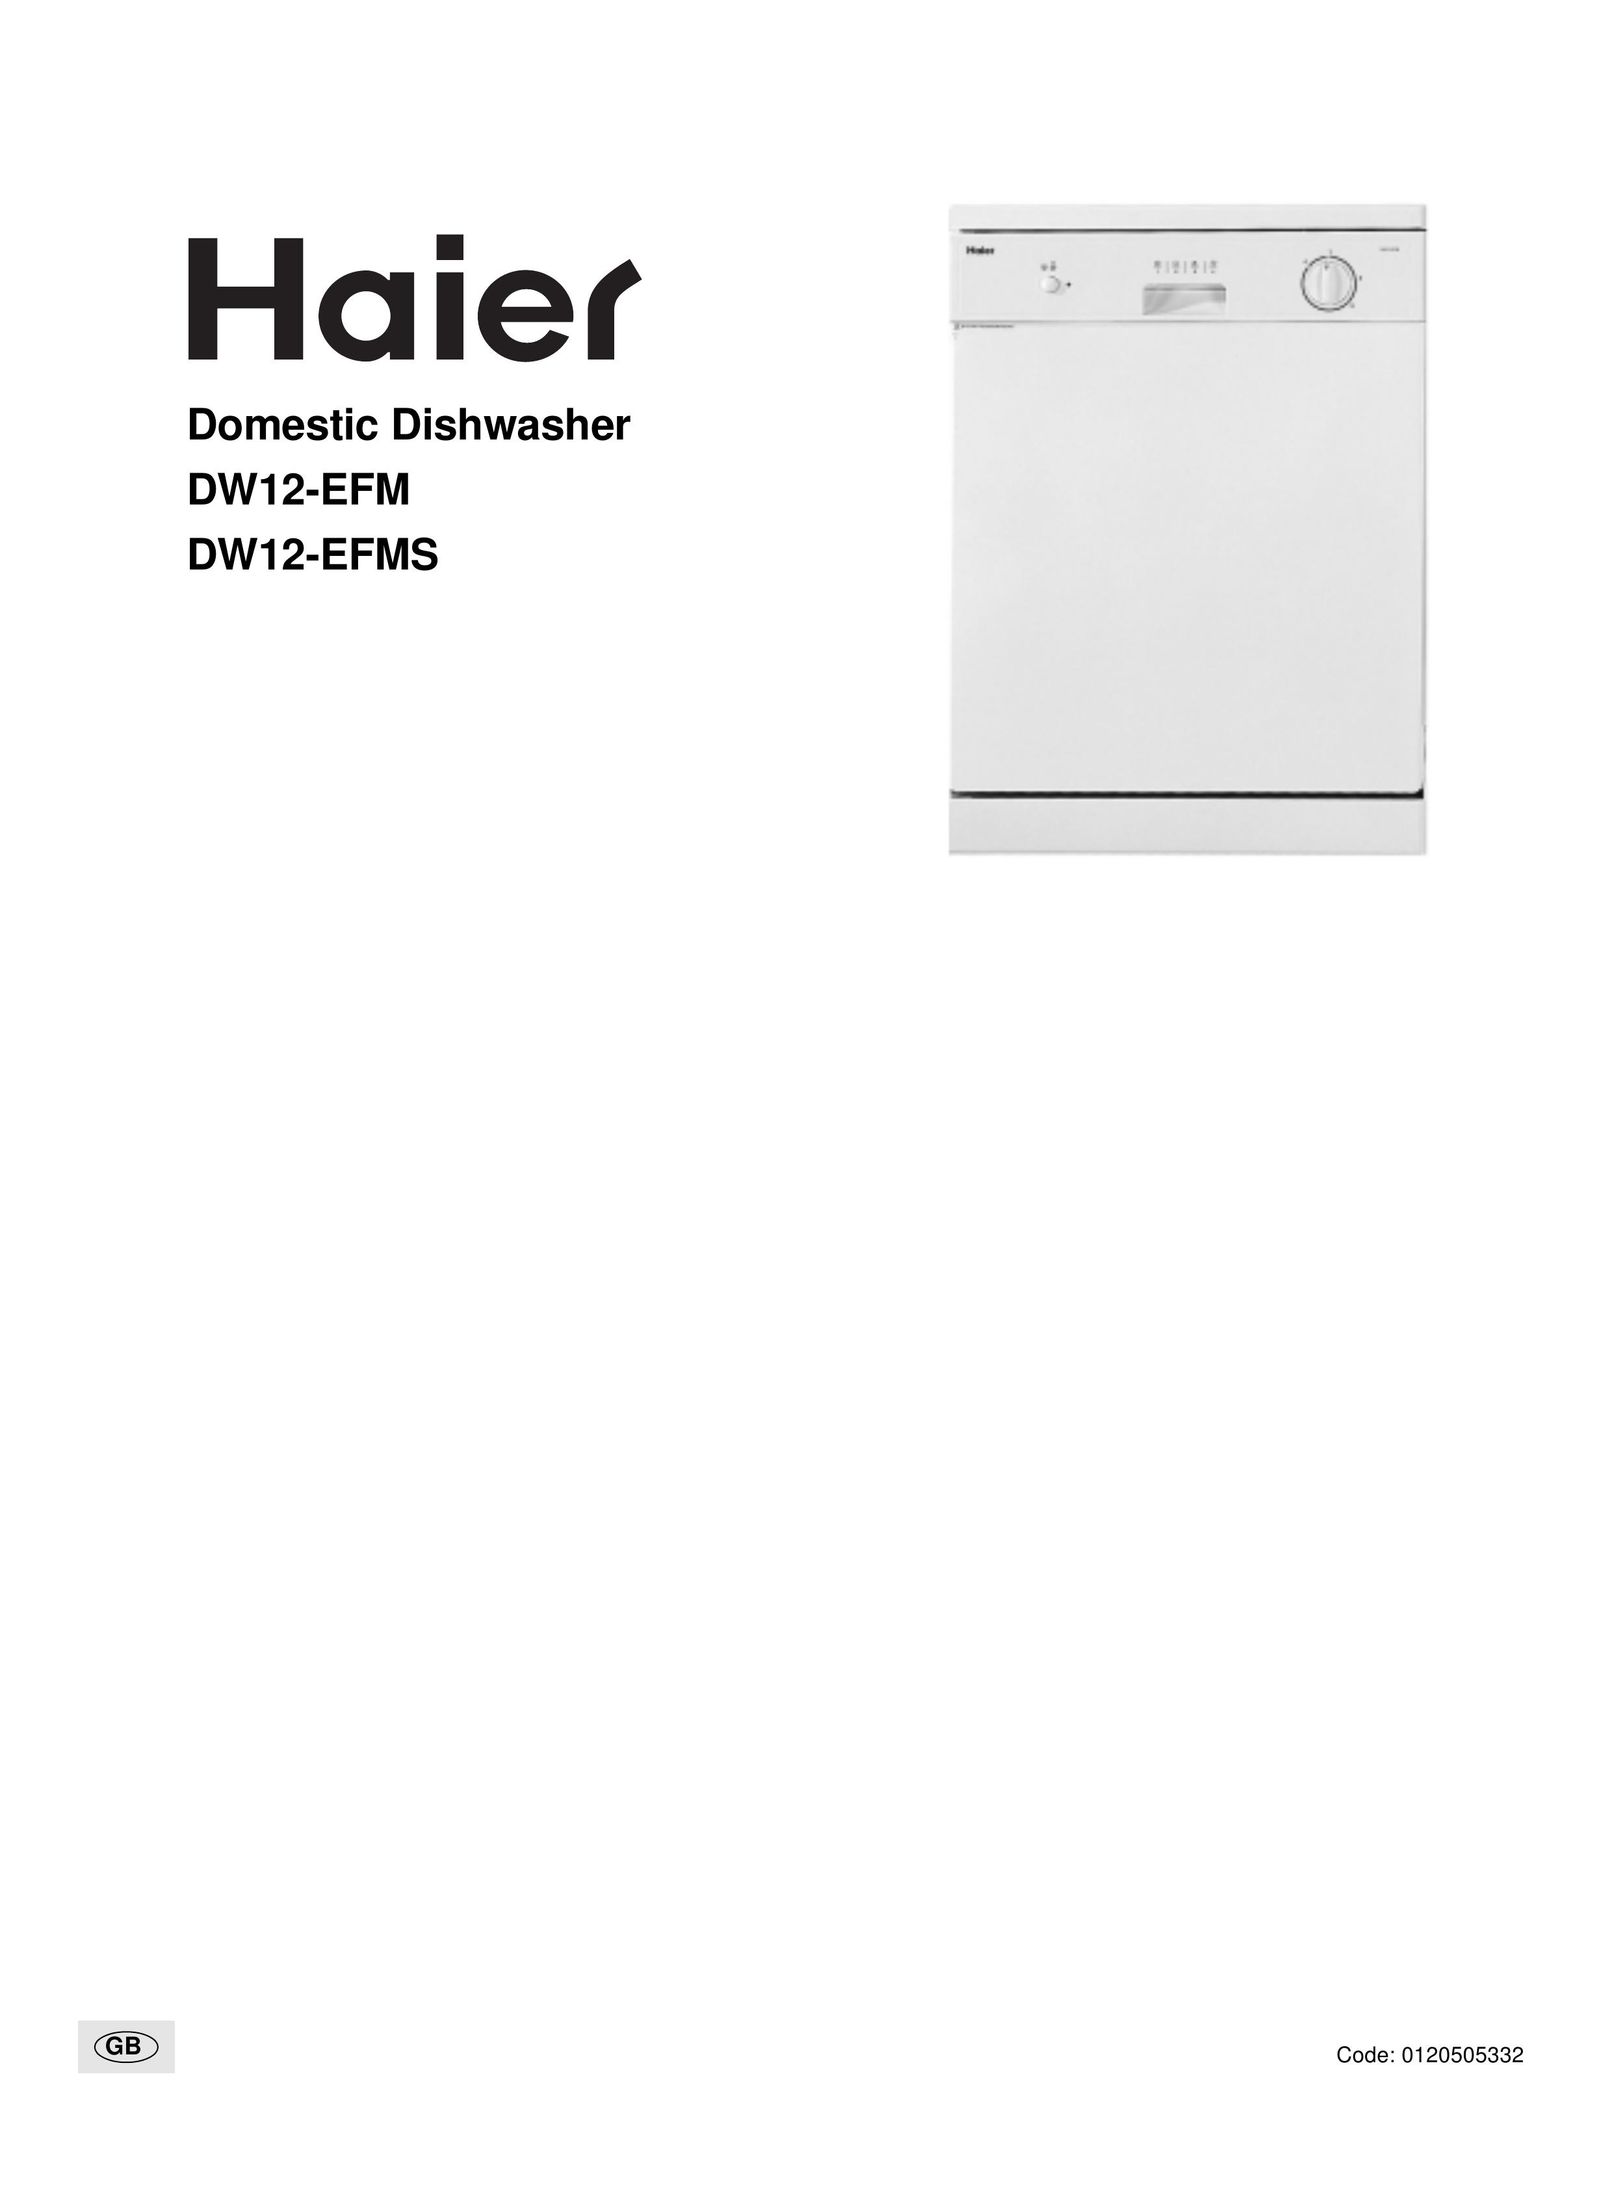 Haier DW12-EFMS Dishwasher User Manual